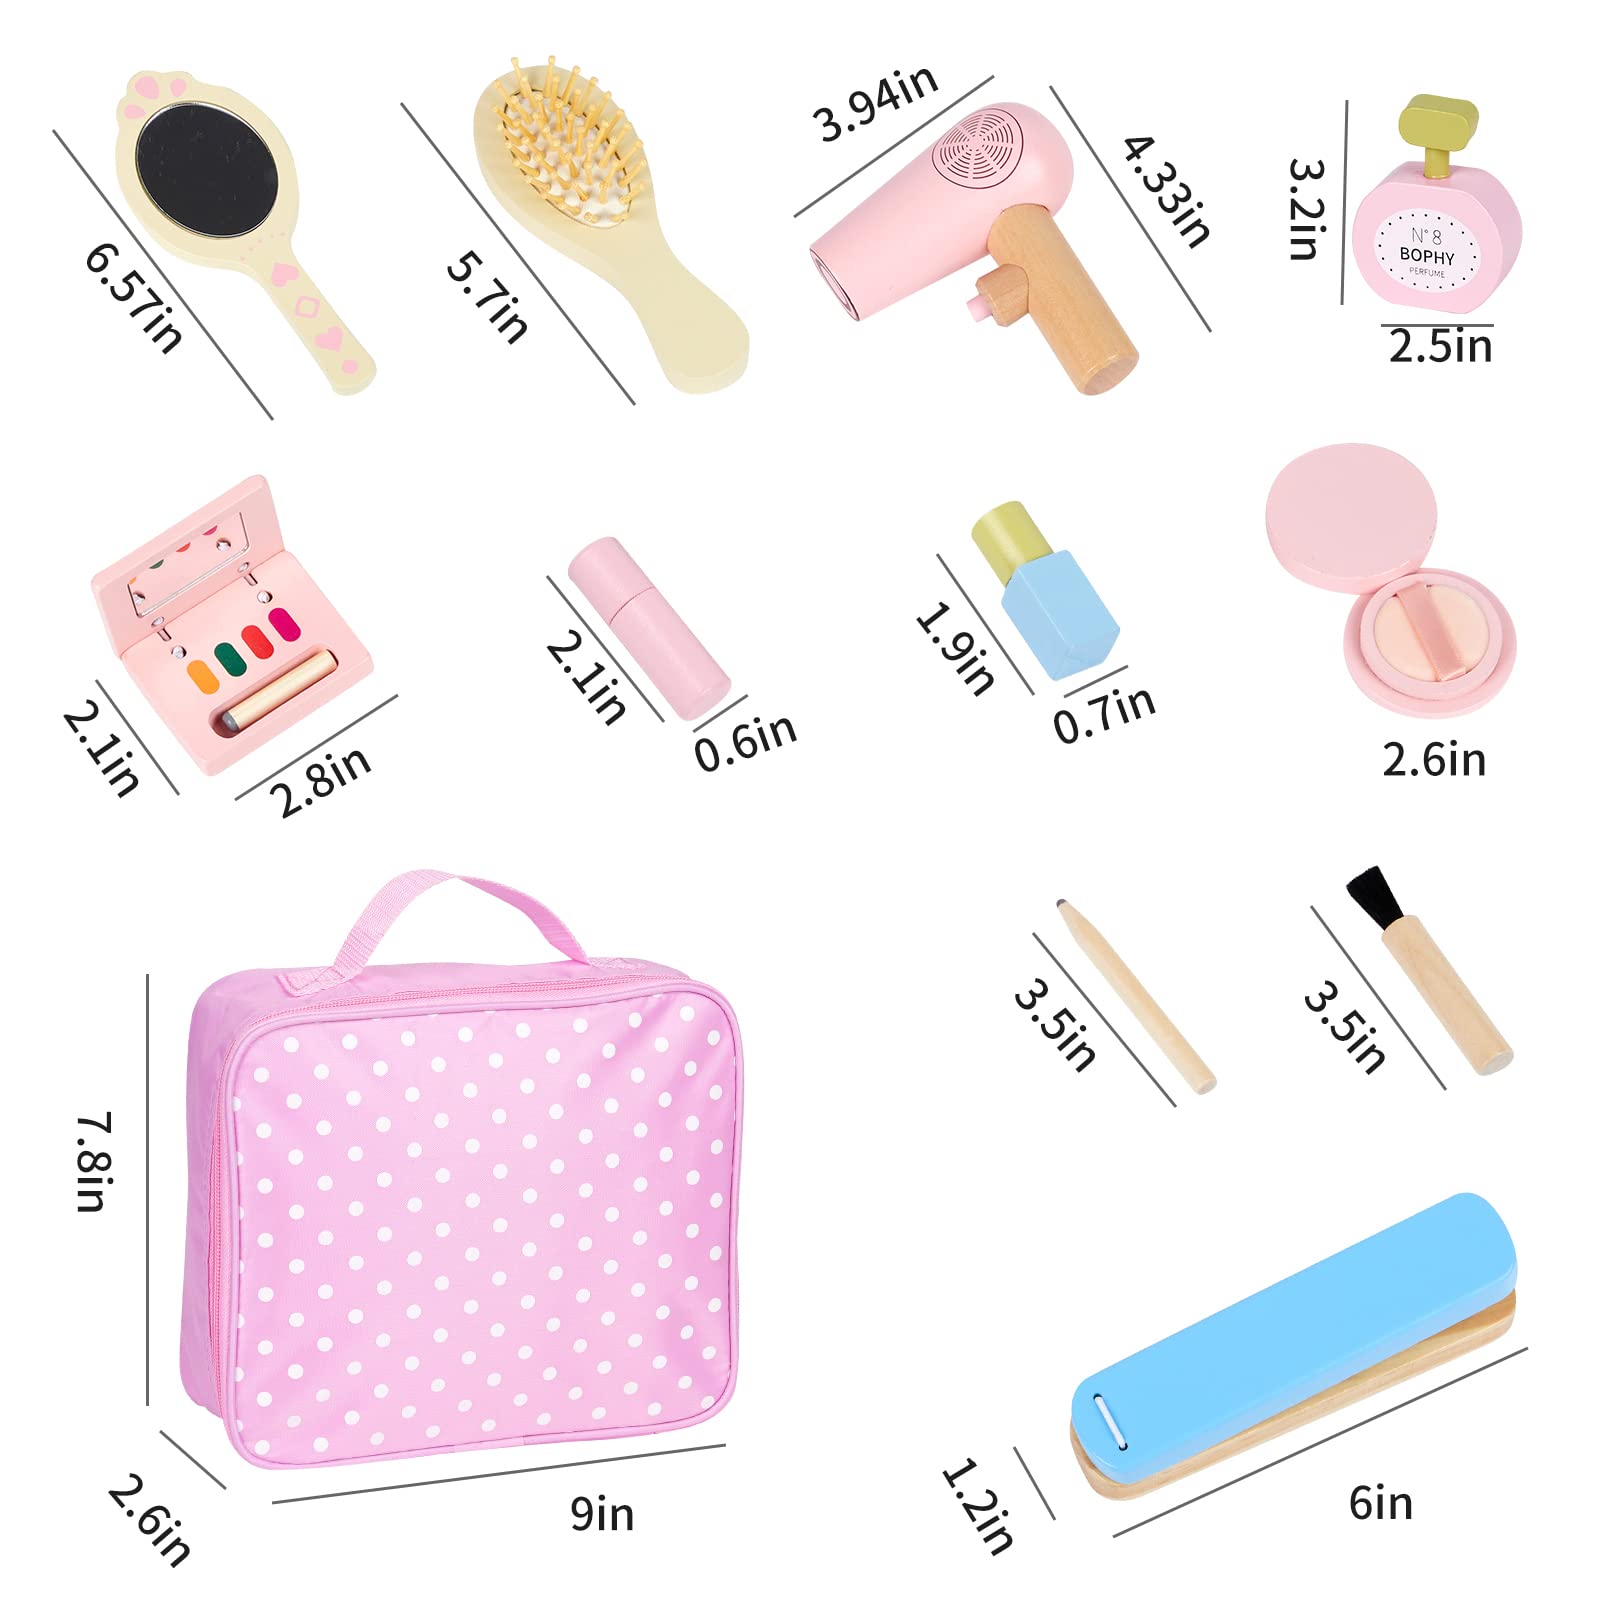 Wooden Makeup Kit Toy, Toddler Pretend Beauty Salon Set, 12PCS Makeup Playset with Hair Dryer, Mirror, Perfume and Storage Bag